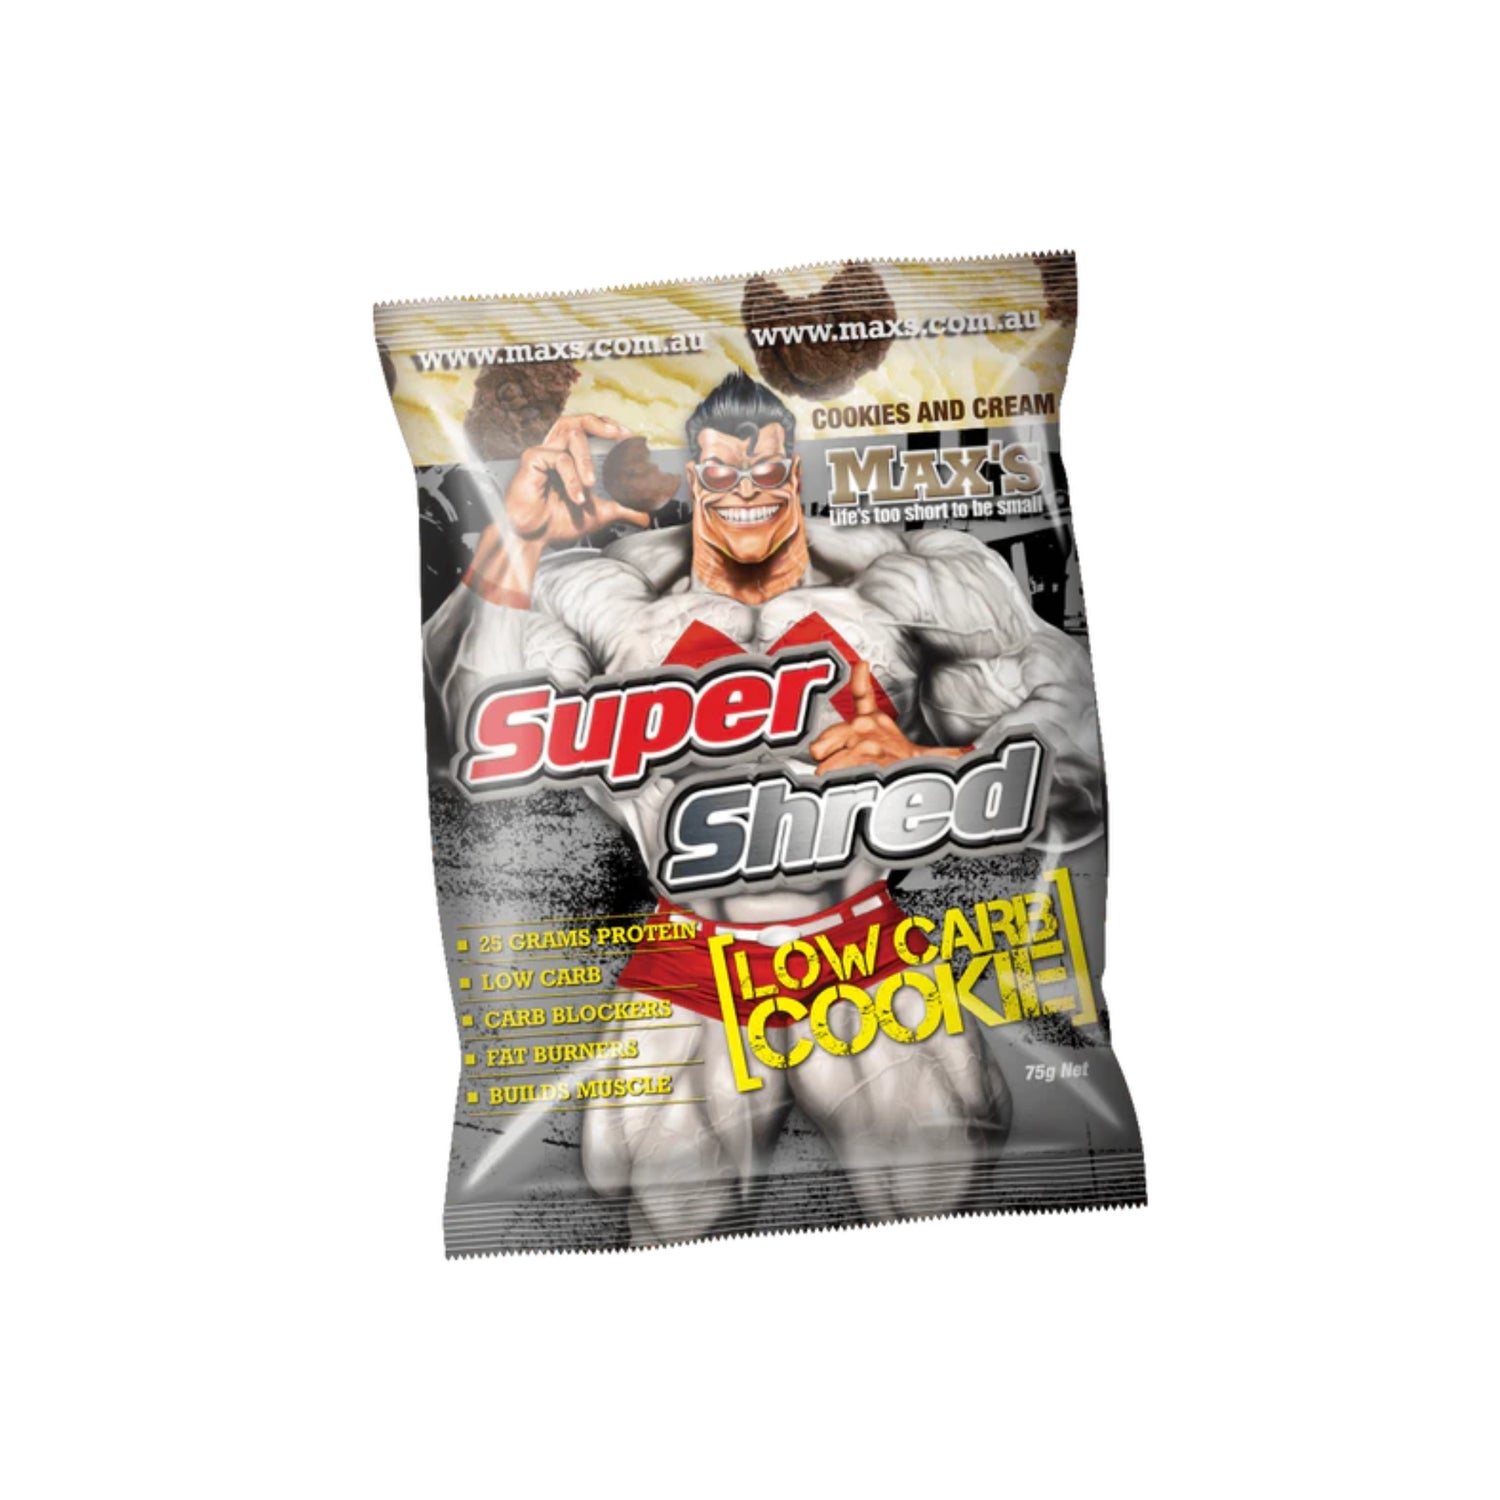 Maxs Supplements Super Shred Cookie